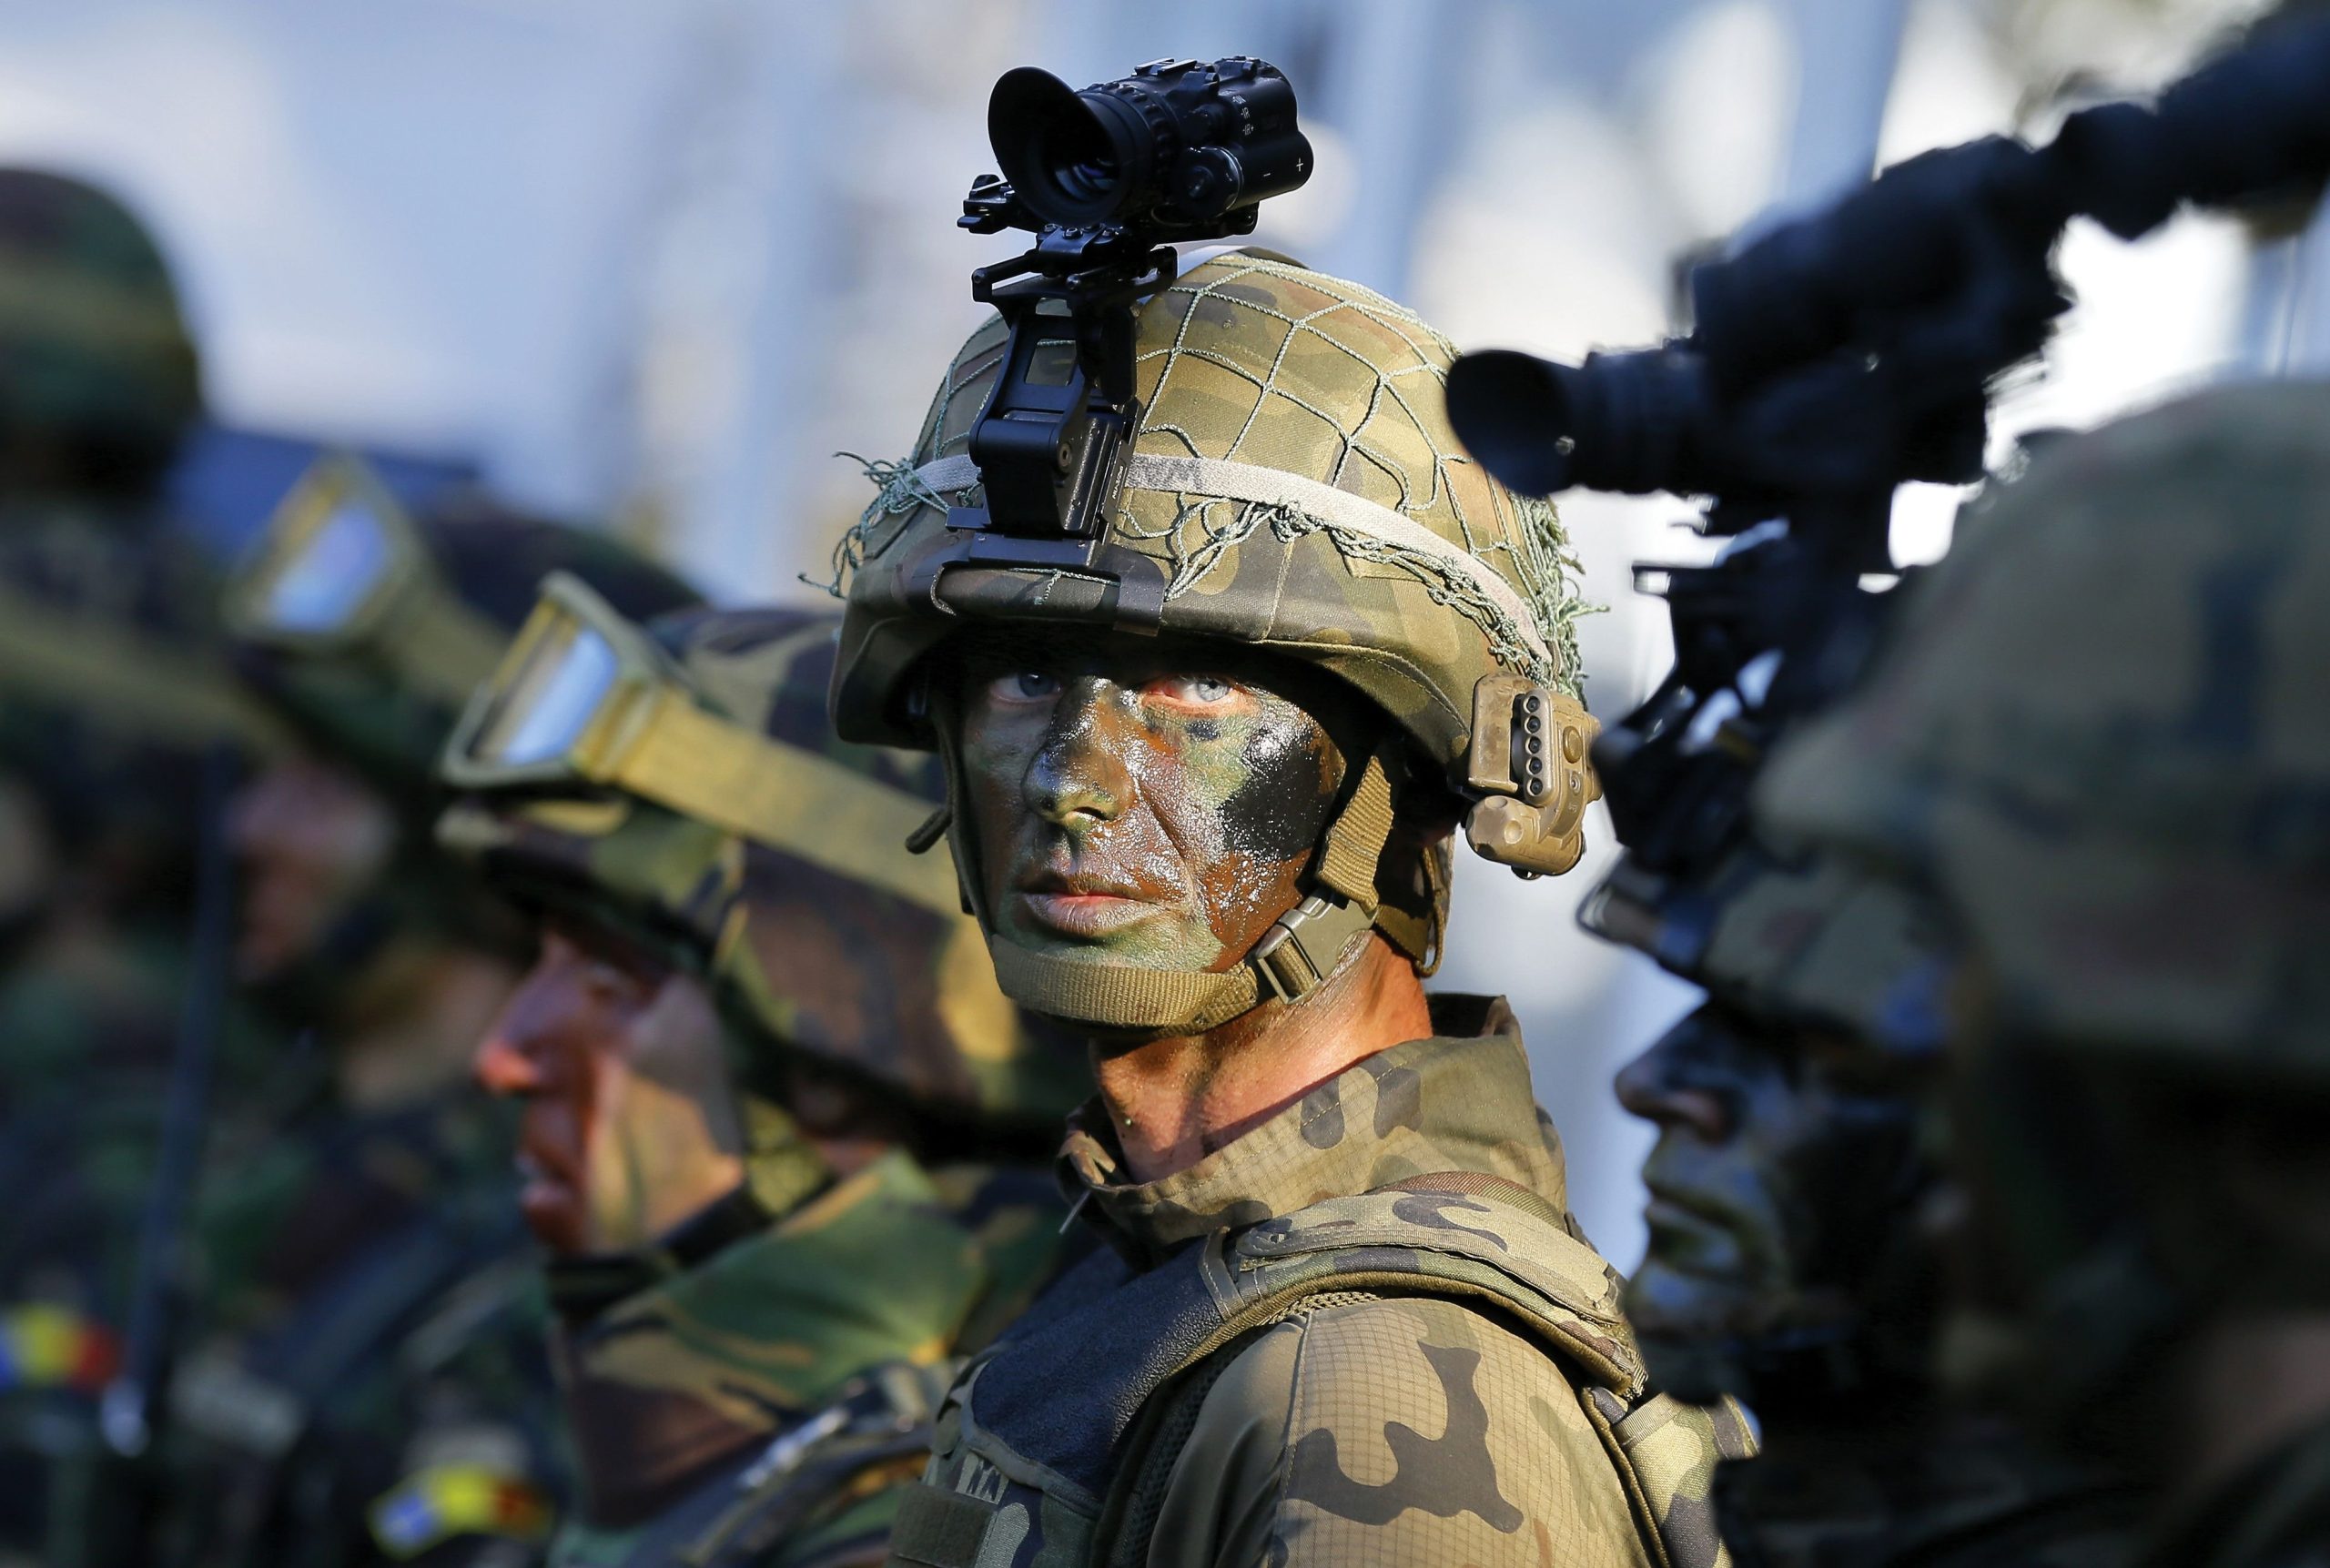 “DEFENDER-Europe 20”: Τη μεγαλύτερη στρατιωτική άσκηση στην Ευρώπη από το τέλος του «ψυχρού πολέμου» σχεδιάζει το ΝΑΤΟ